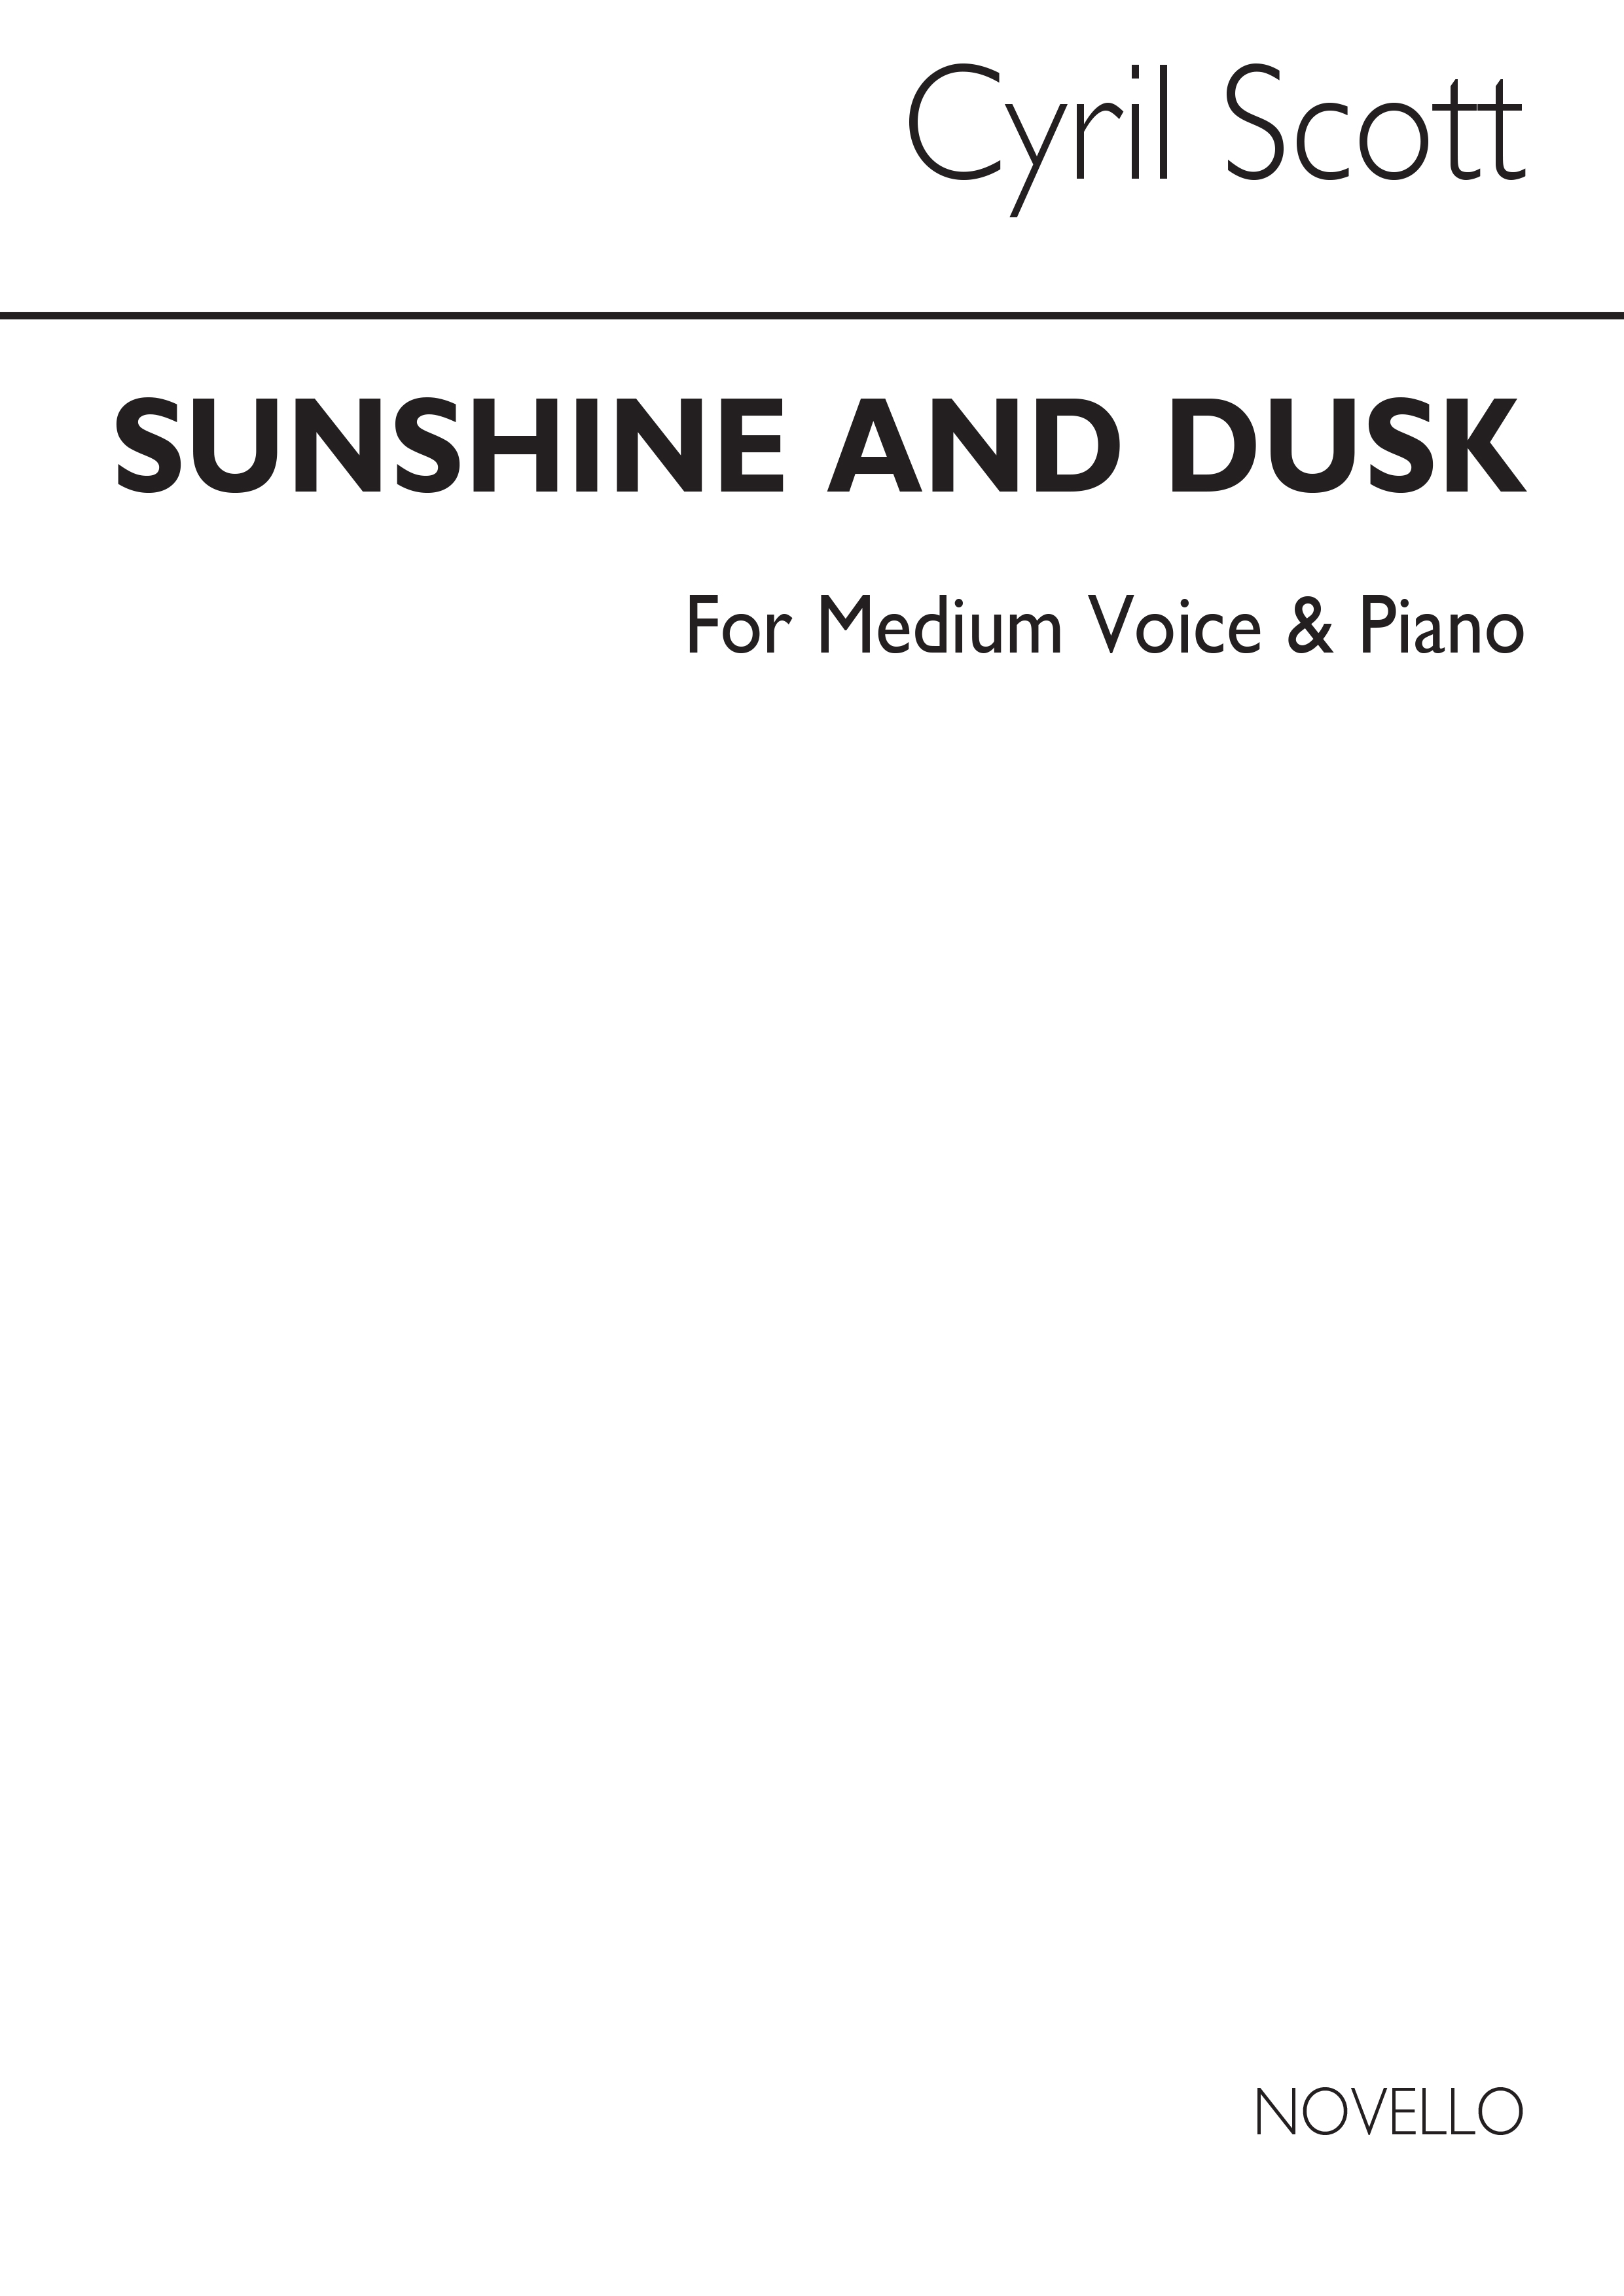 Cyril Scott: Sunshine And Dusk-medium Voice/Piano